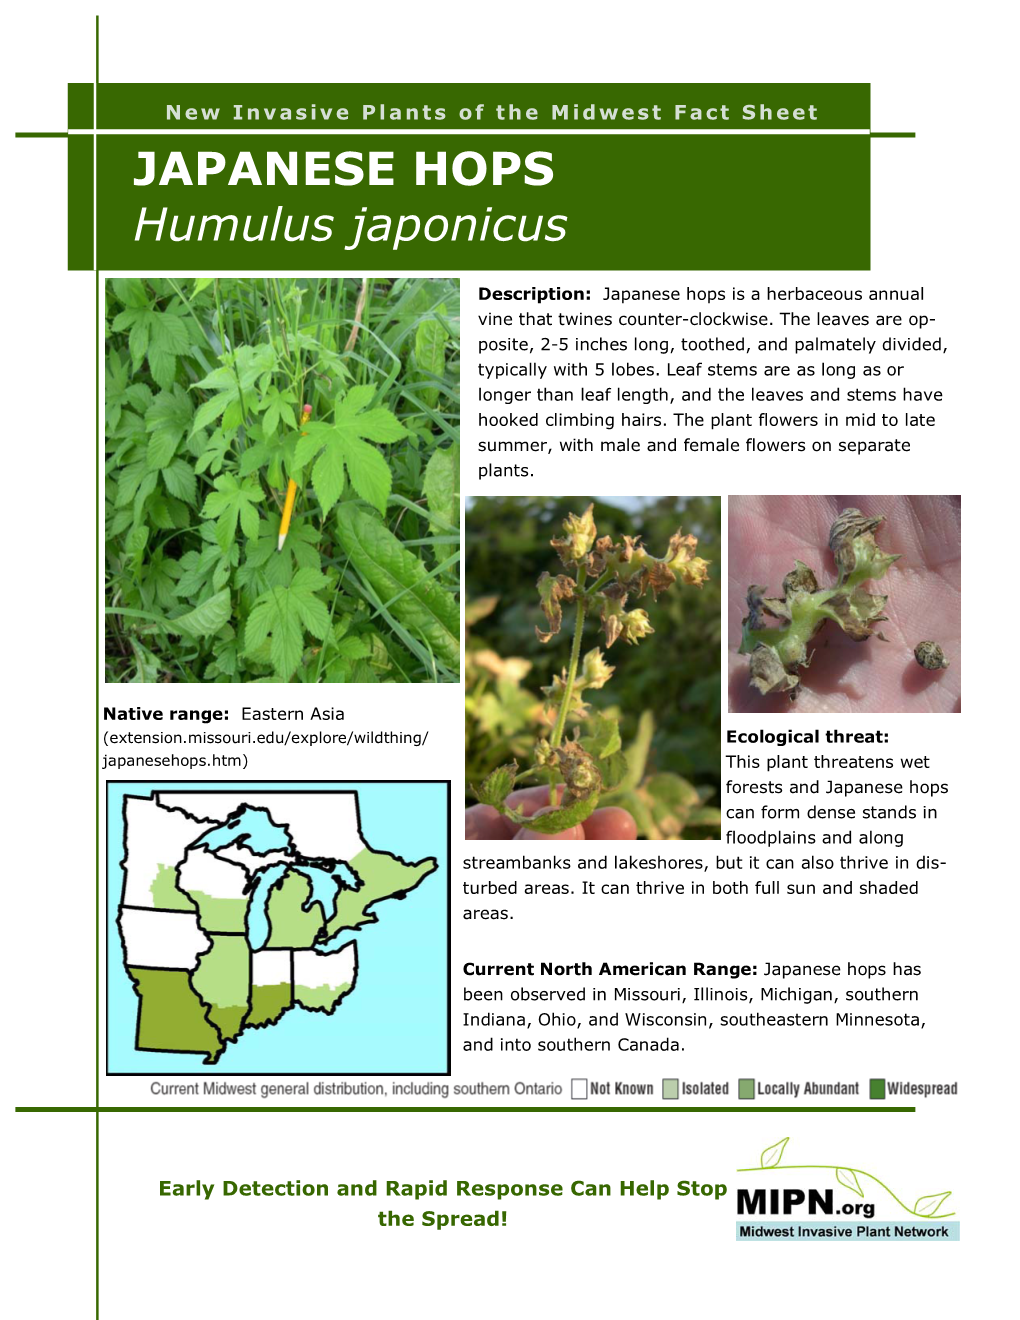 JAPANESE HOPS Humulus Japonicus